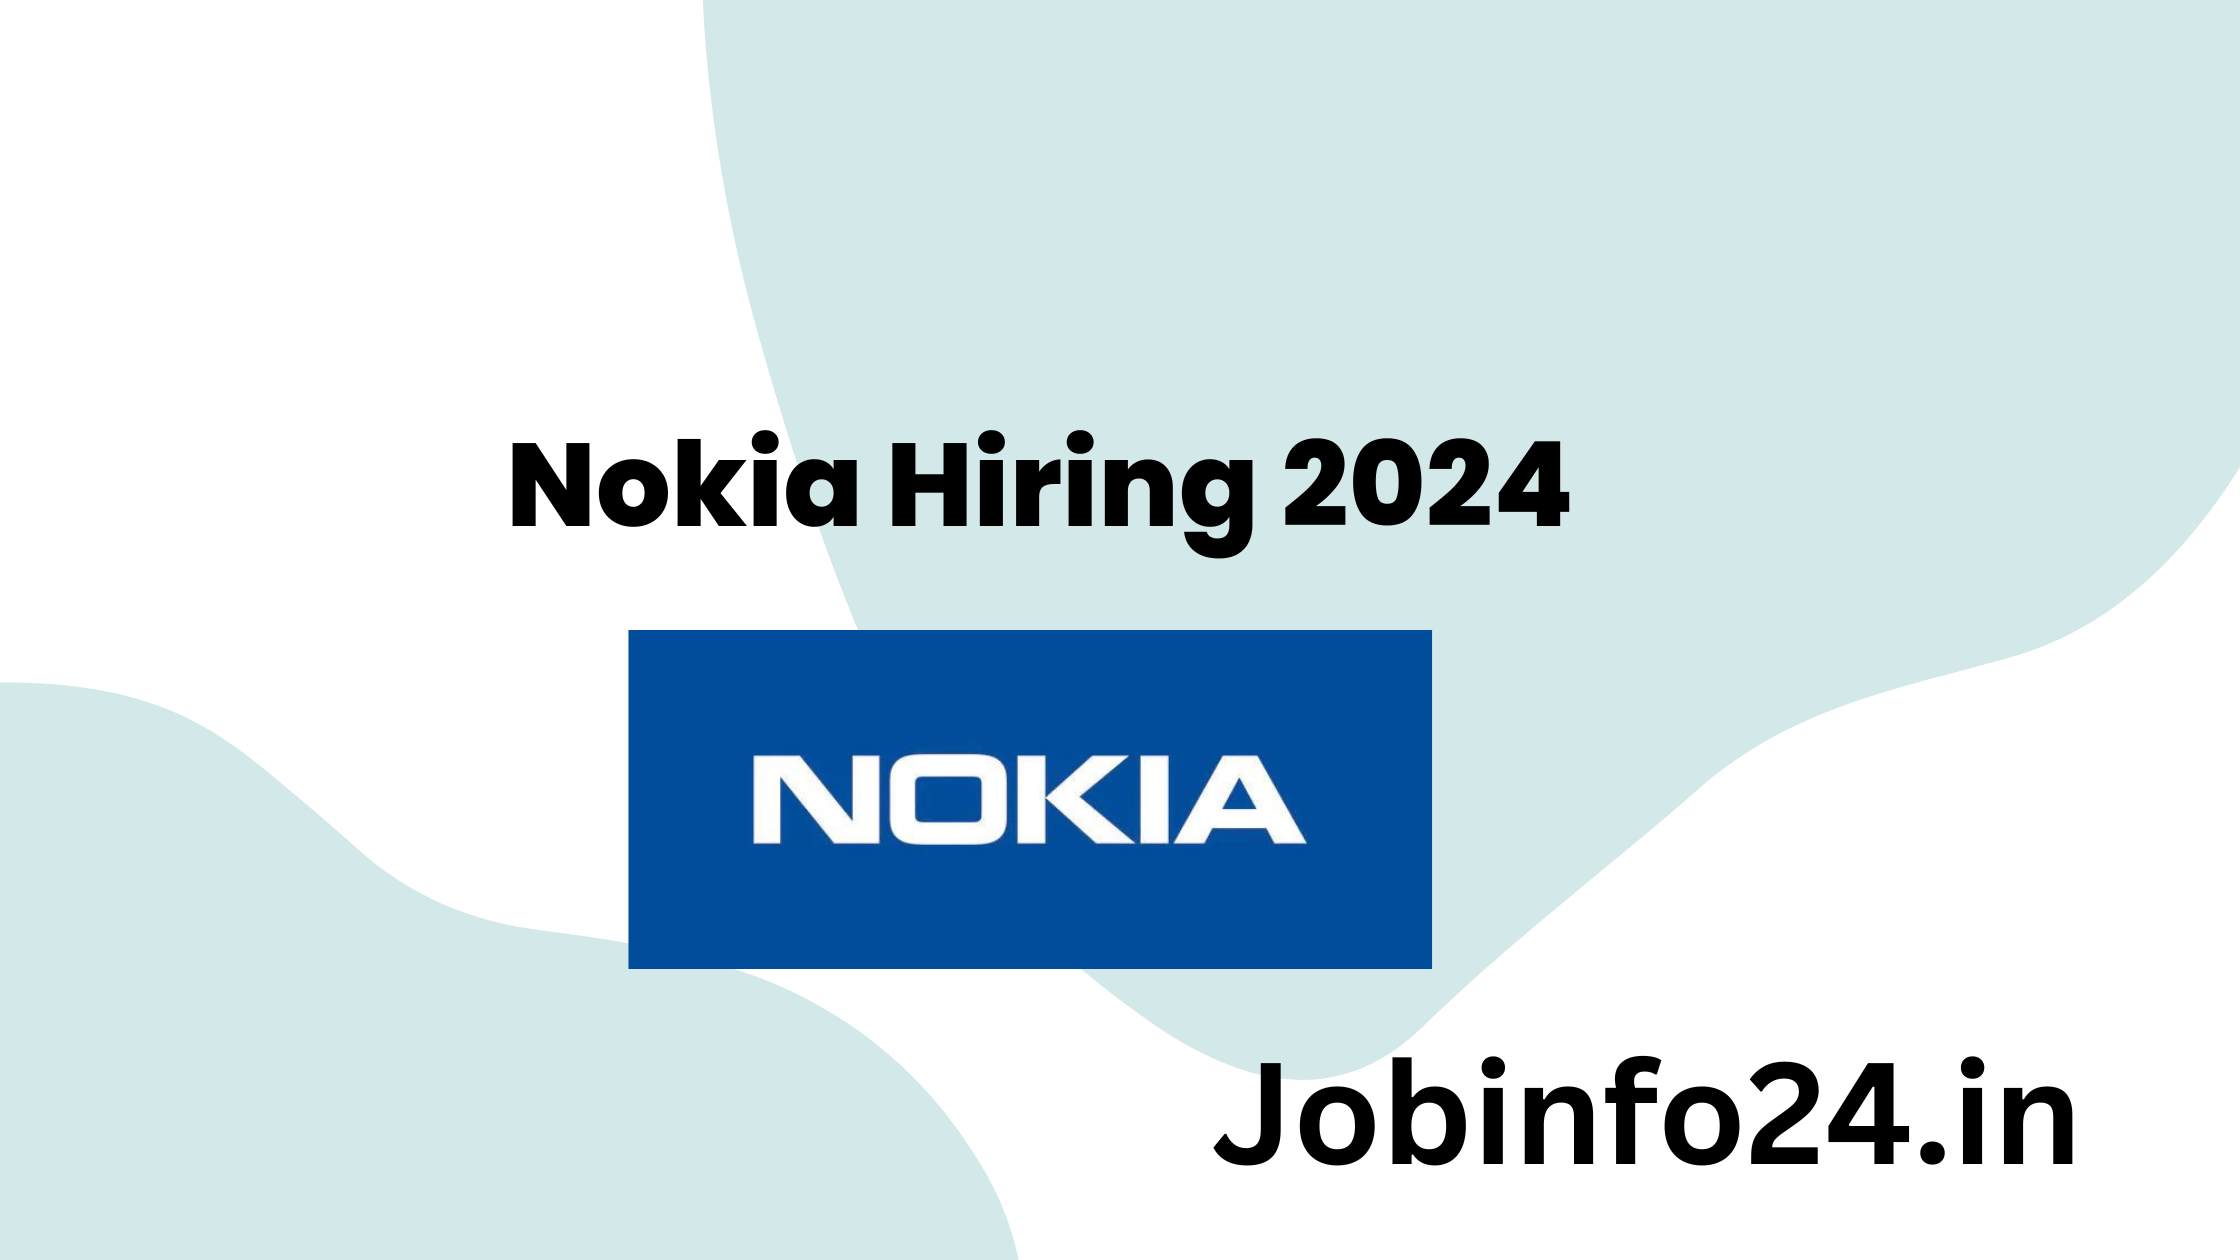 Nokia Hiring 2024